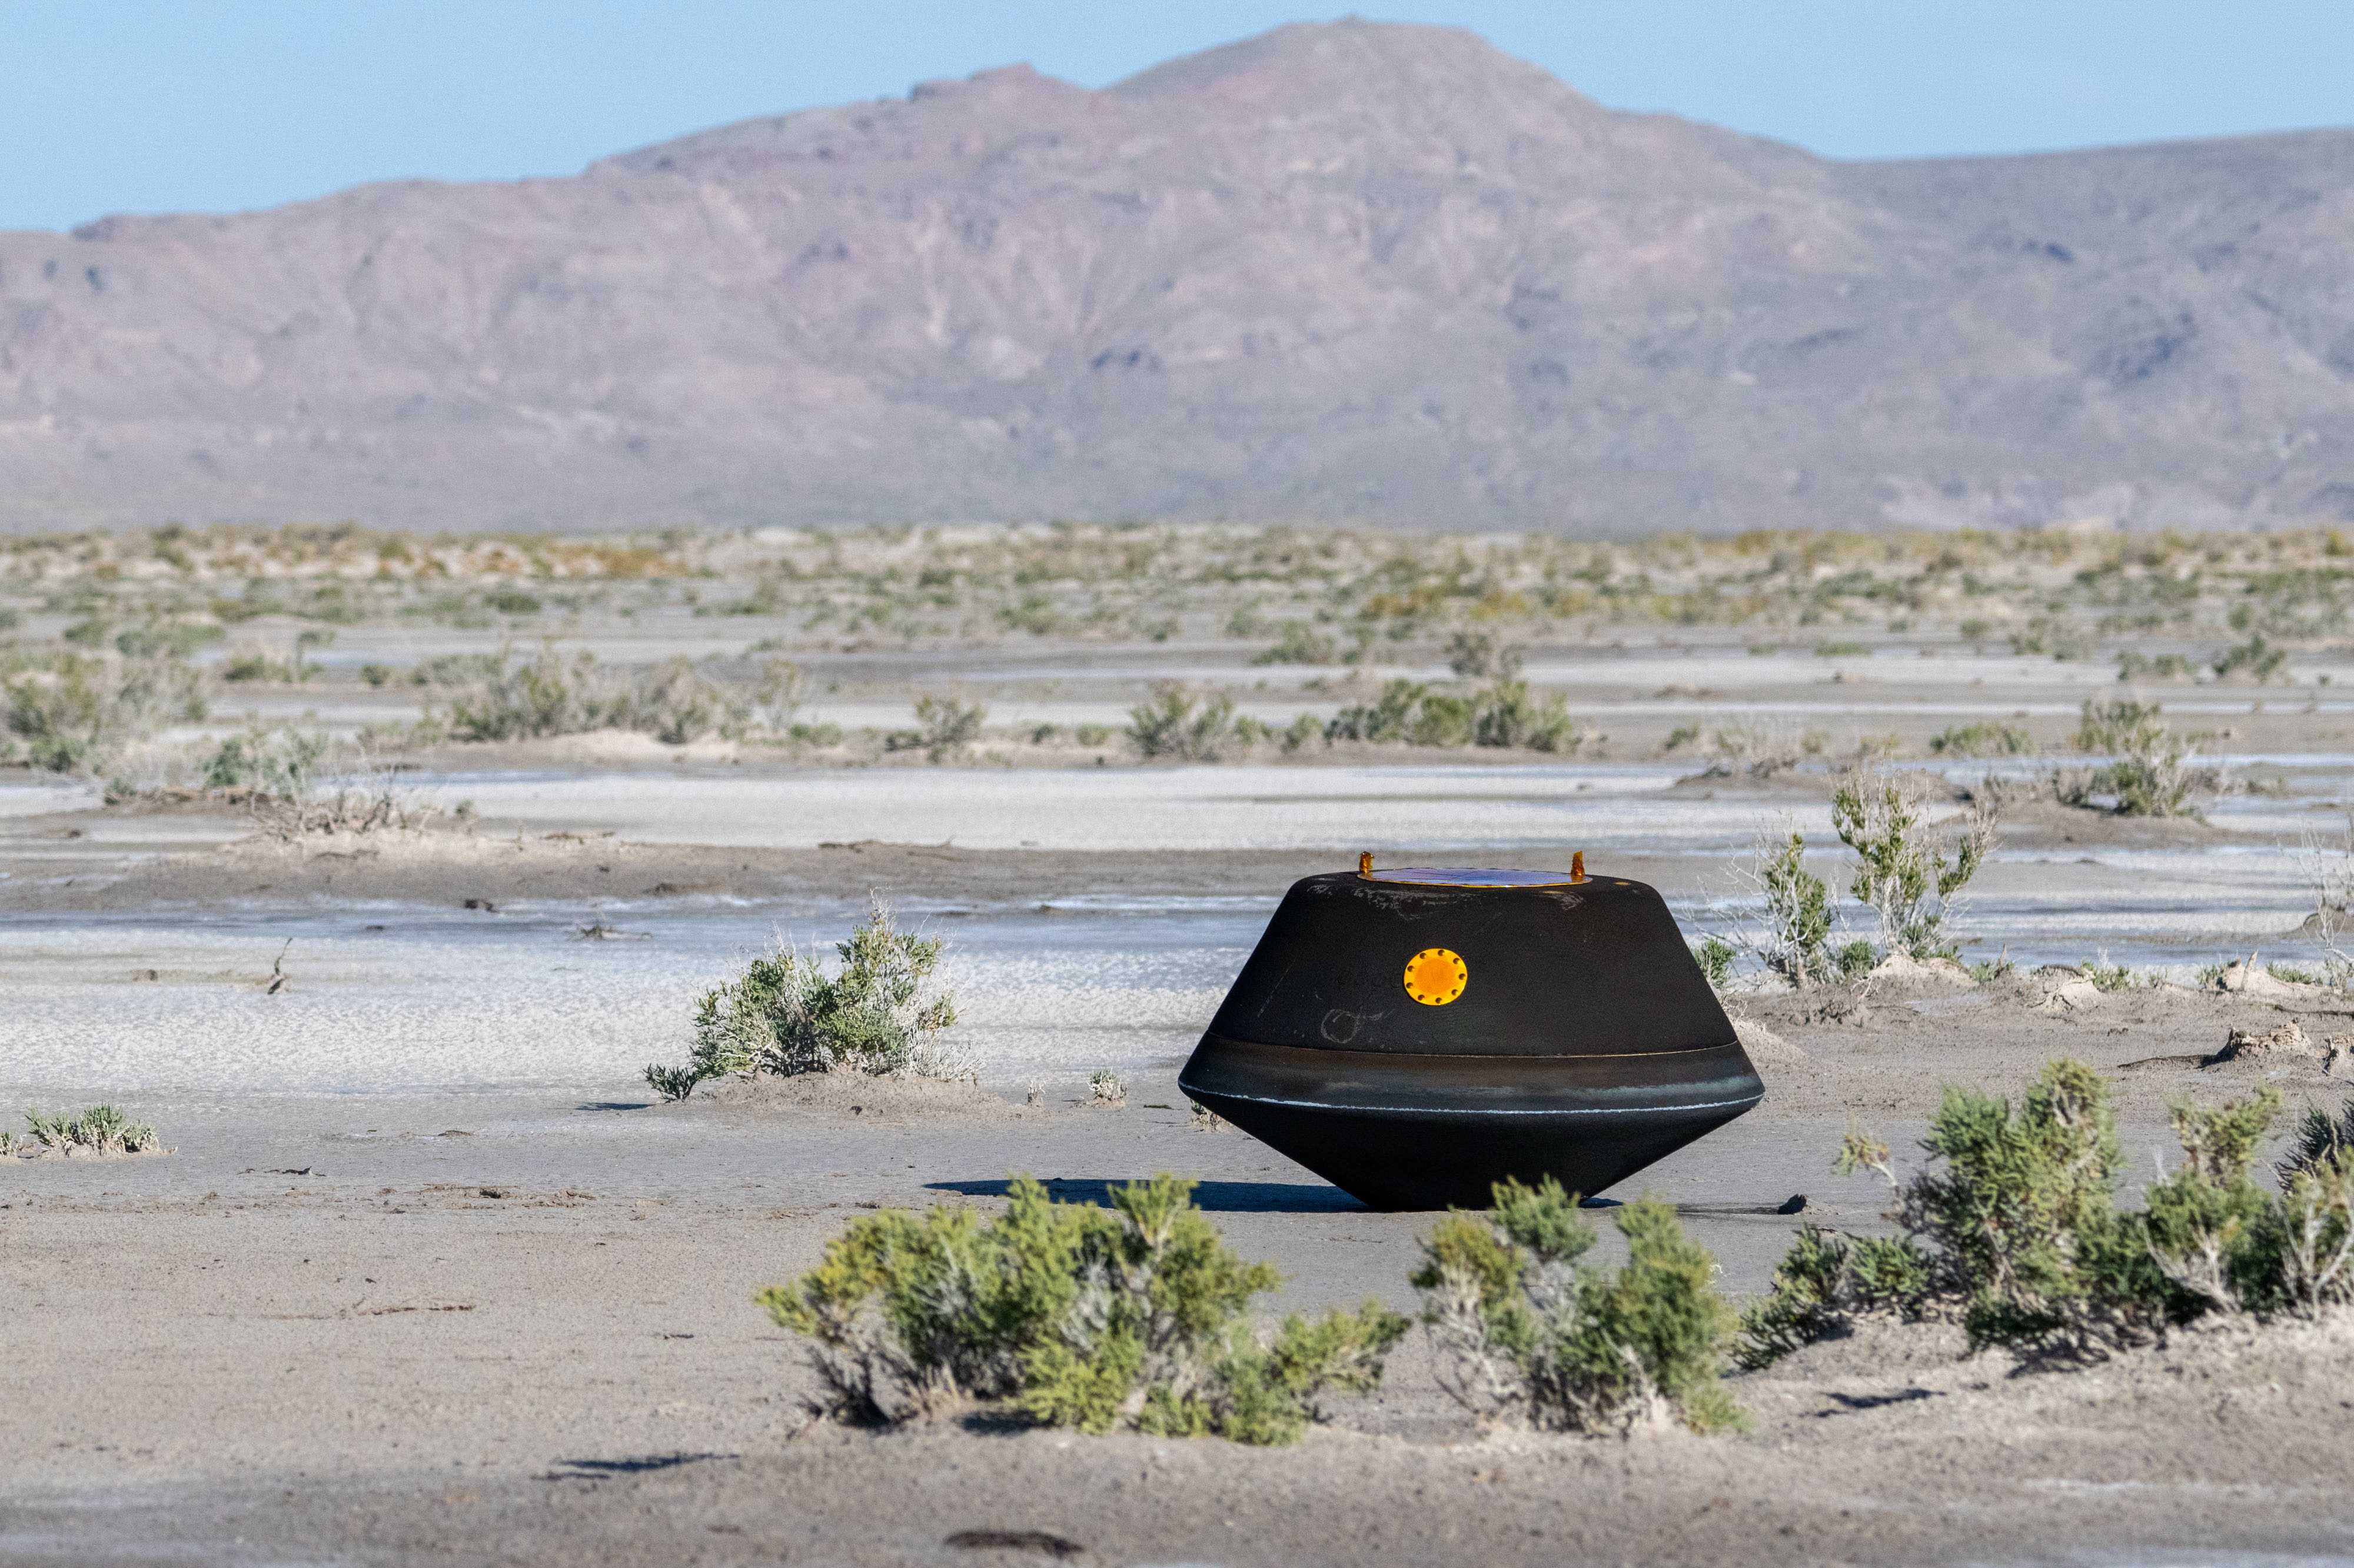 Black, top-shaped sample return capsule sits on the desert ground.⁣